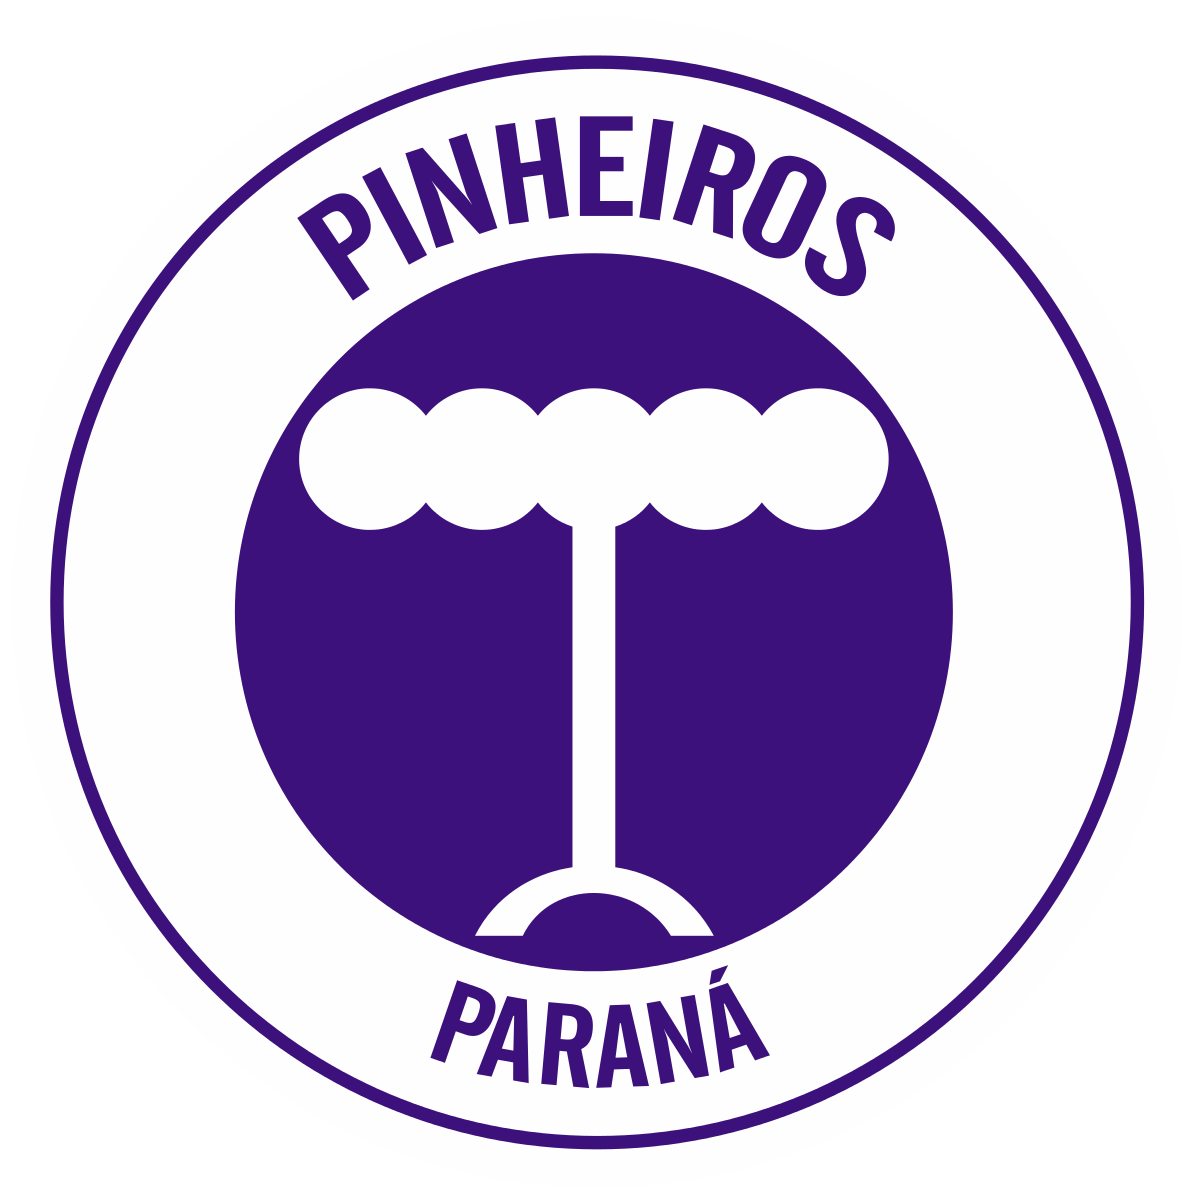 Esporte Clube Pinheiros (handball) - Wikipedia